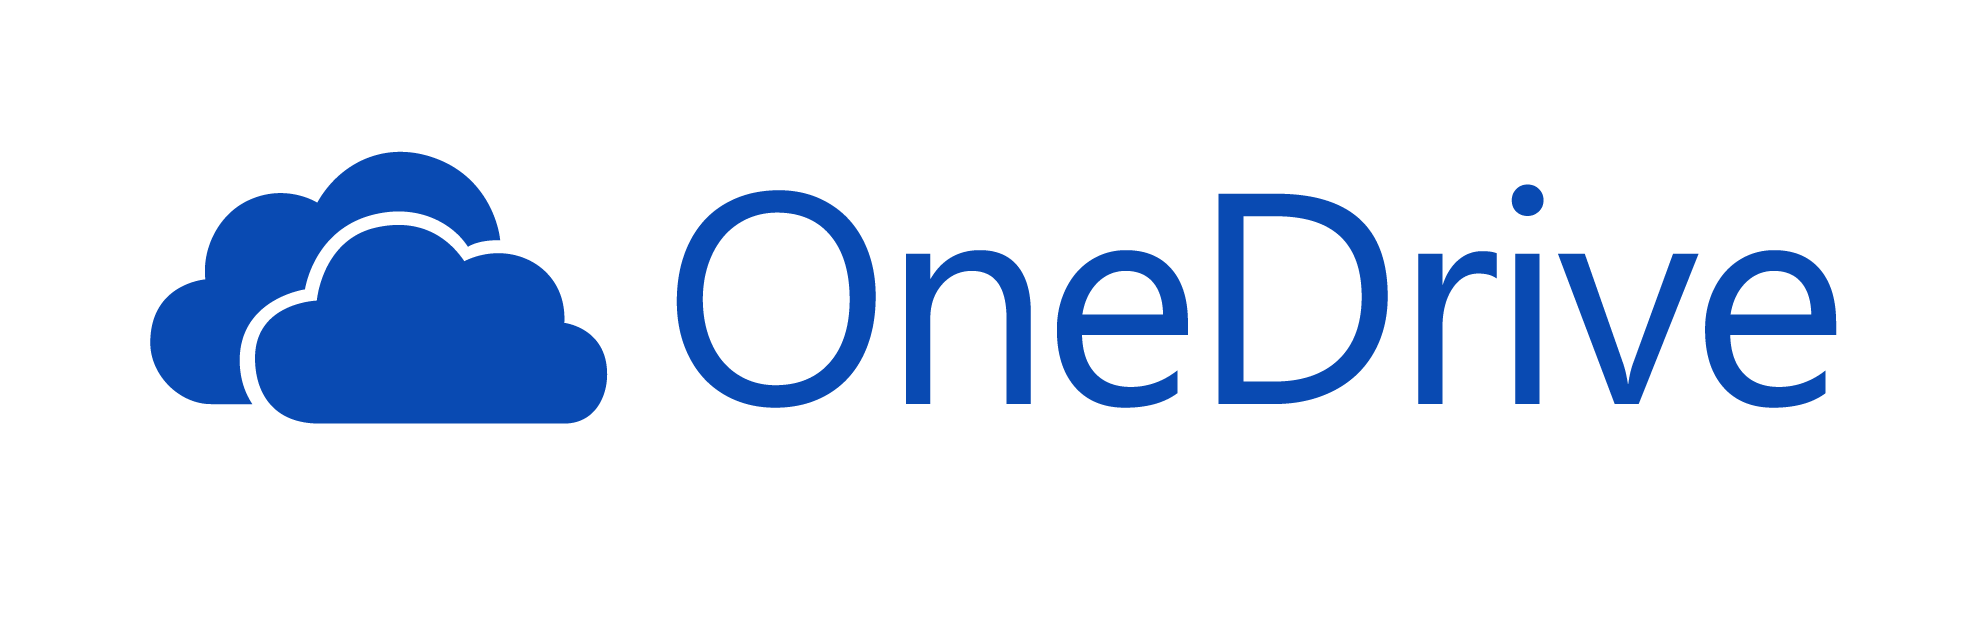 One Drive logo